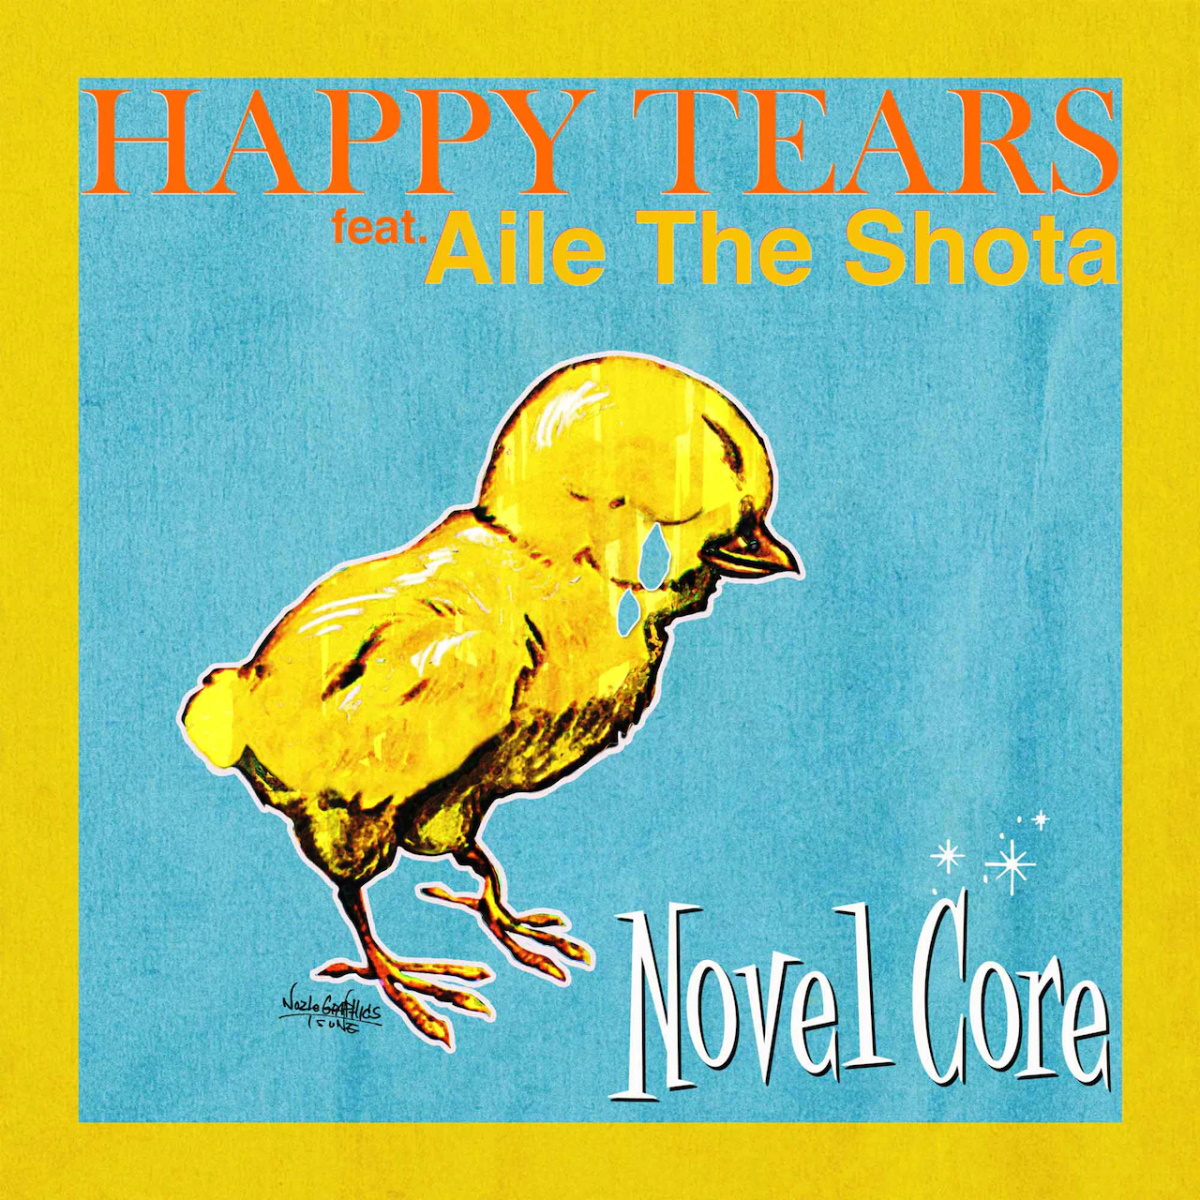 Cover art for『Novel Core - HAPPY TEARS feat. Aile The Shota』from the release『HAPPY TEARS feat. Aile The Shota』